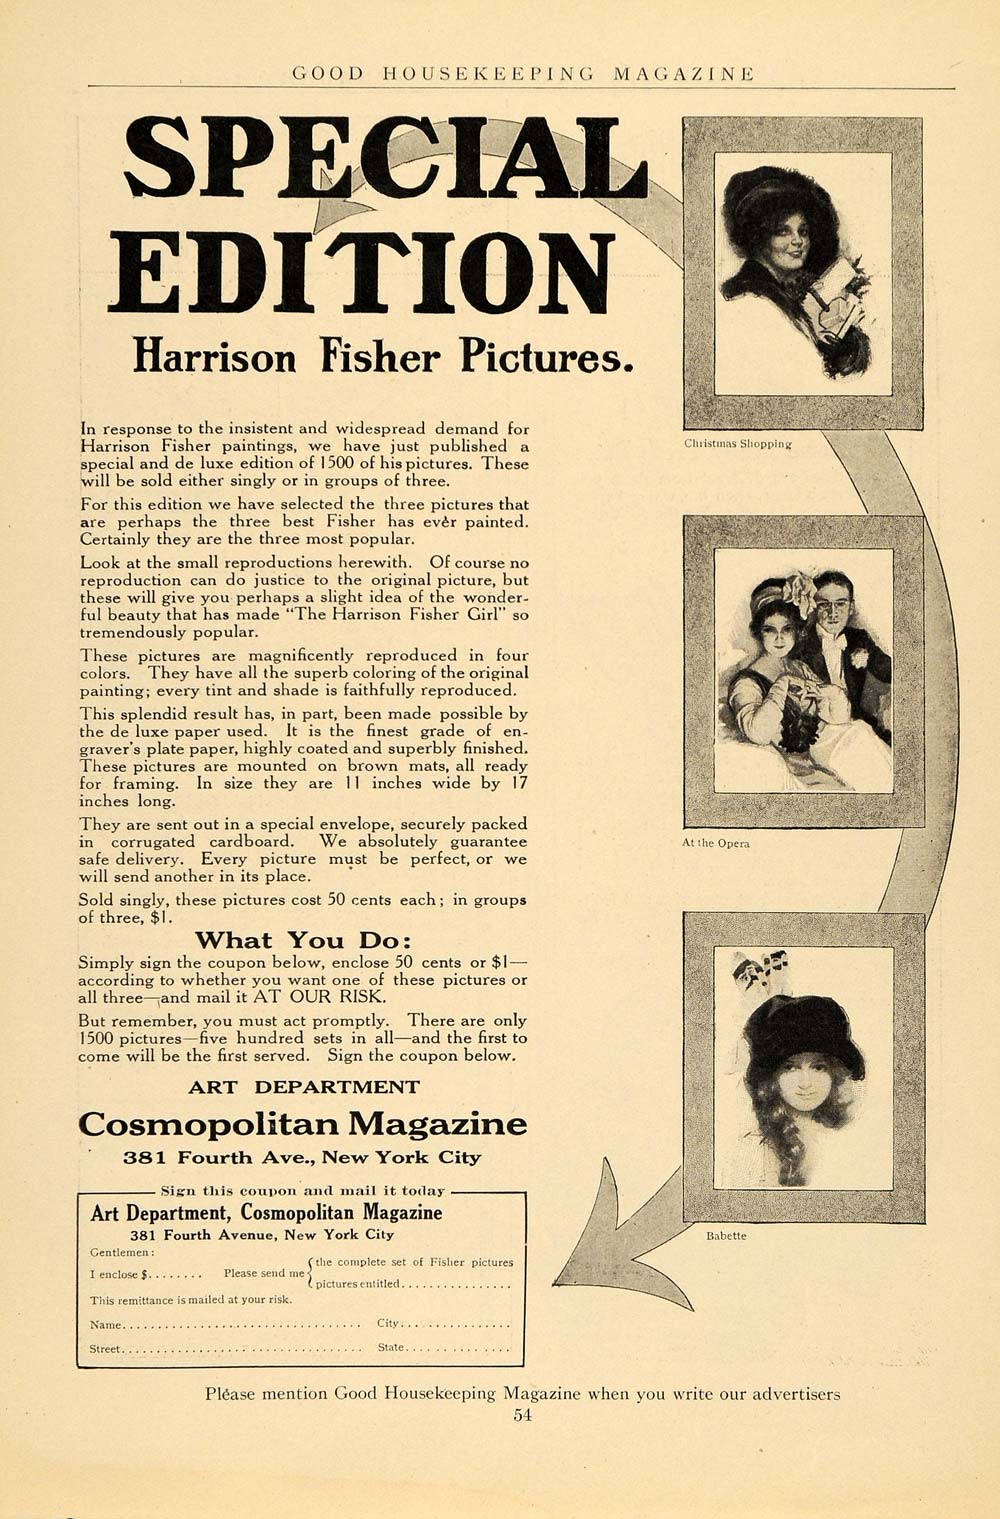 1912 Ad Cosmopolitan Magazine Harrison Fisher Pics - ORIGINAL ADVERTISING GH2